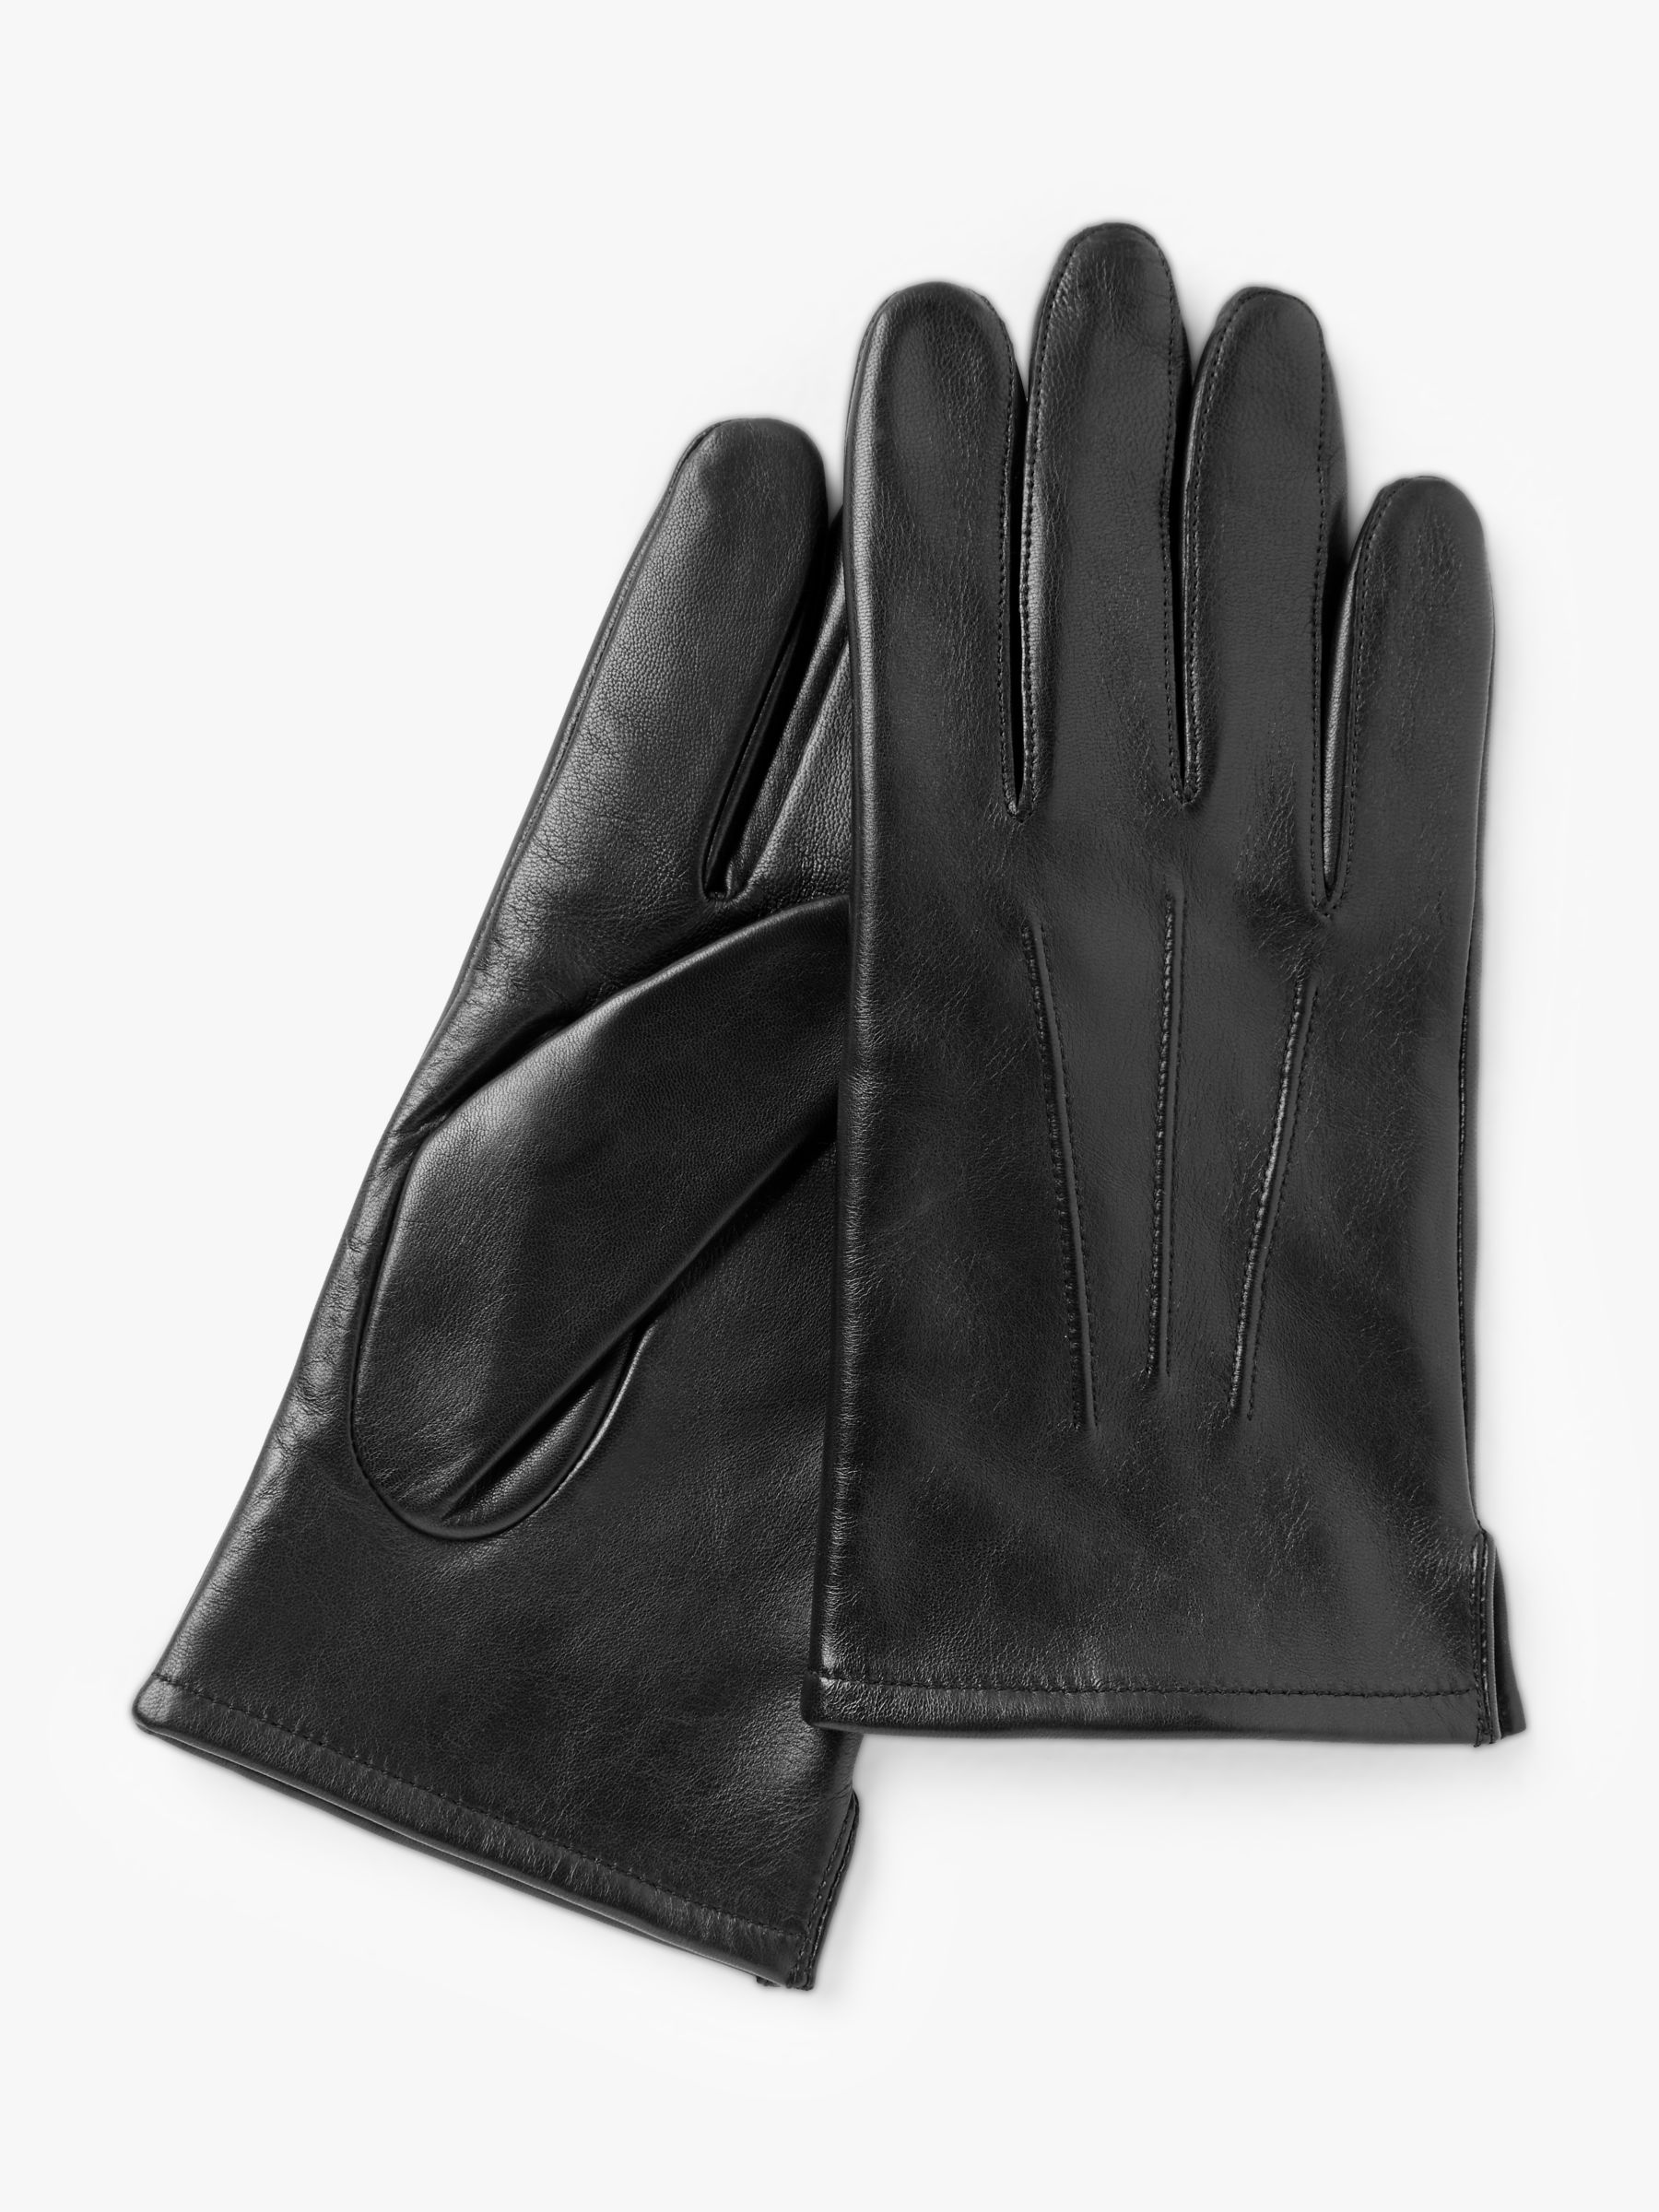 Sheepskin Lined Gloves | John Lewis & Partners